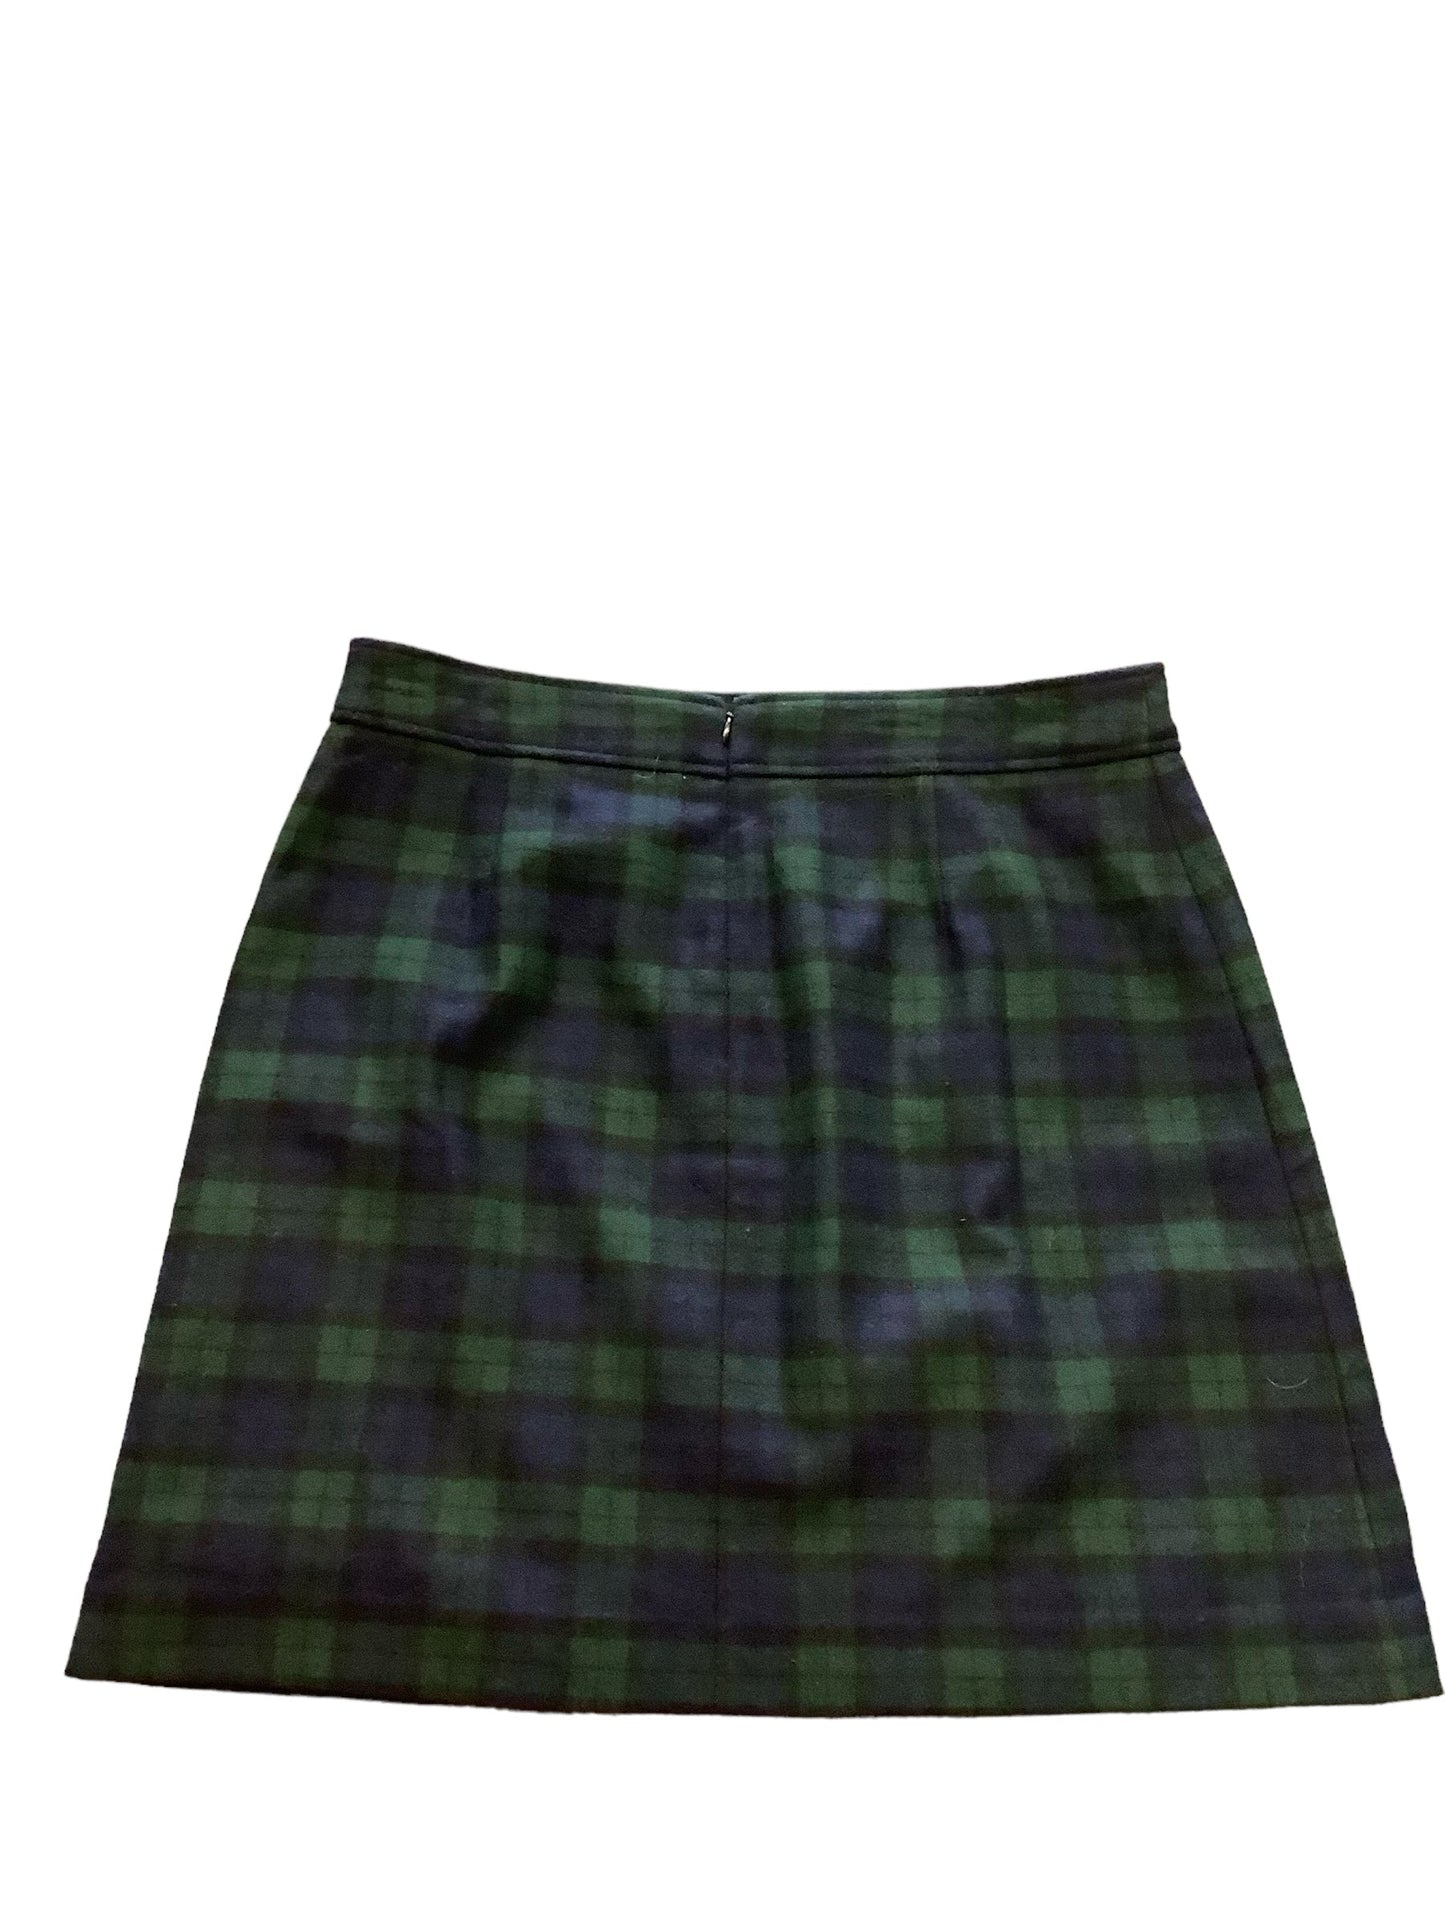 Skirt Midi By J. Crew  Size: 14